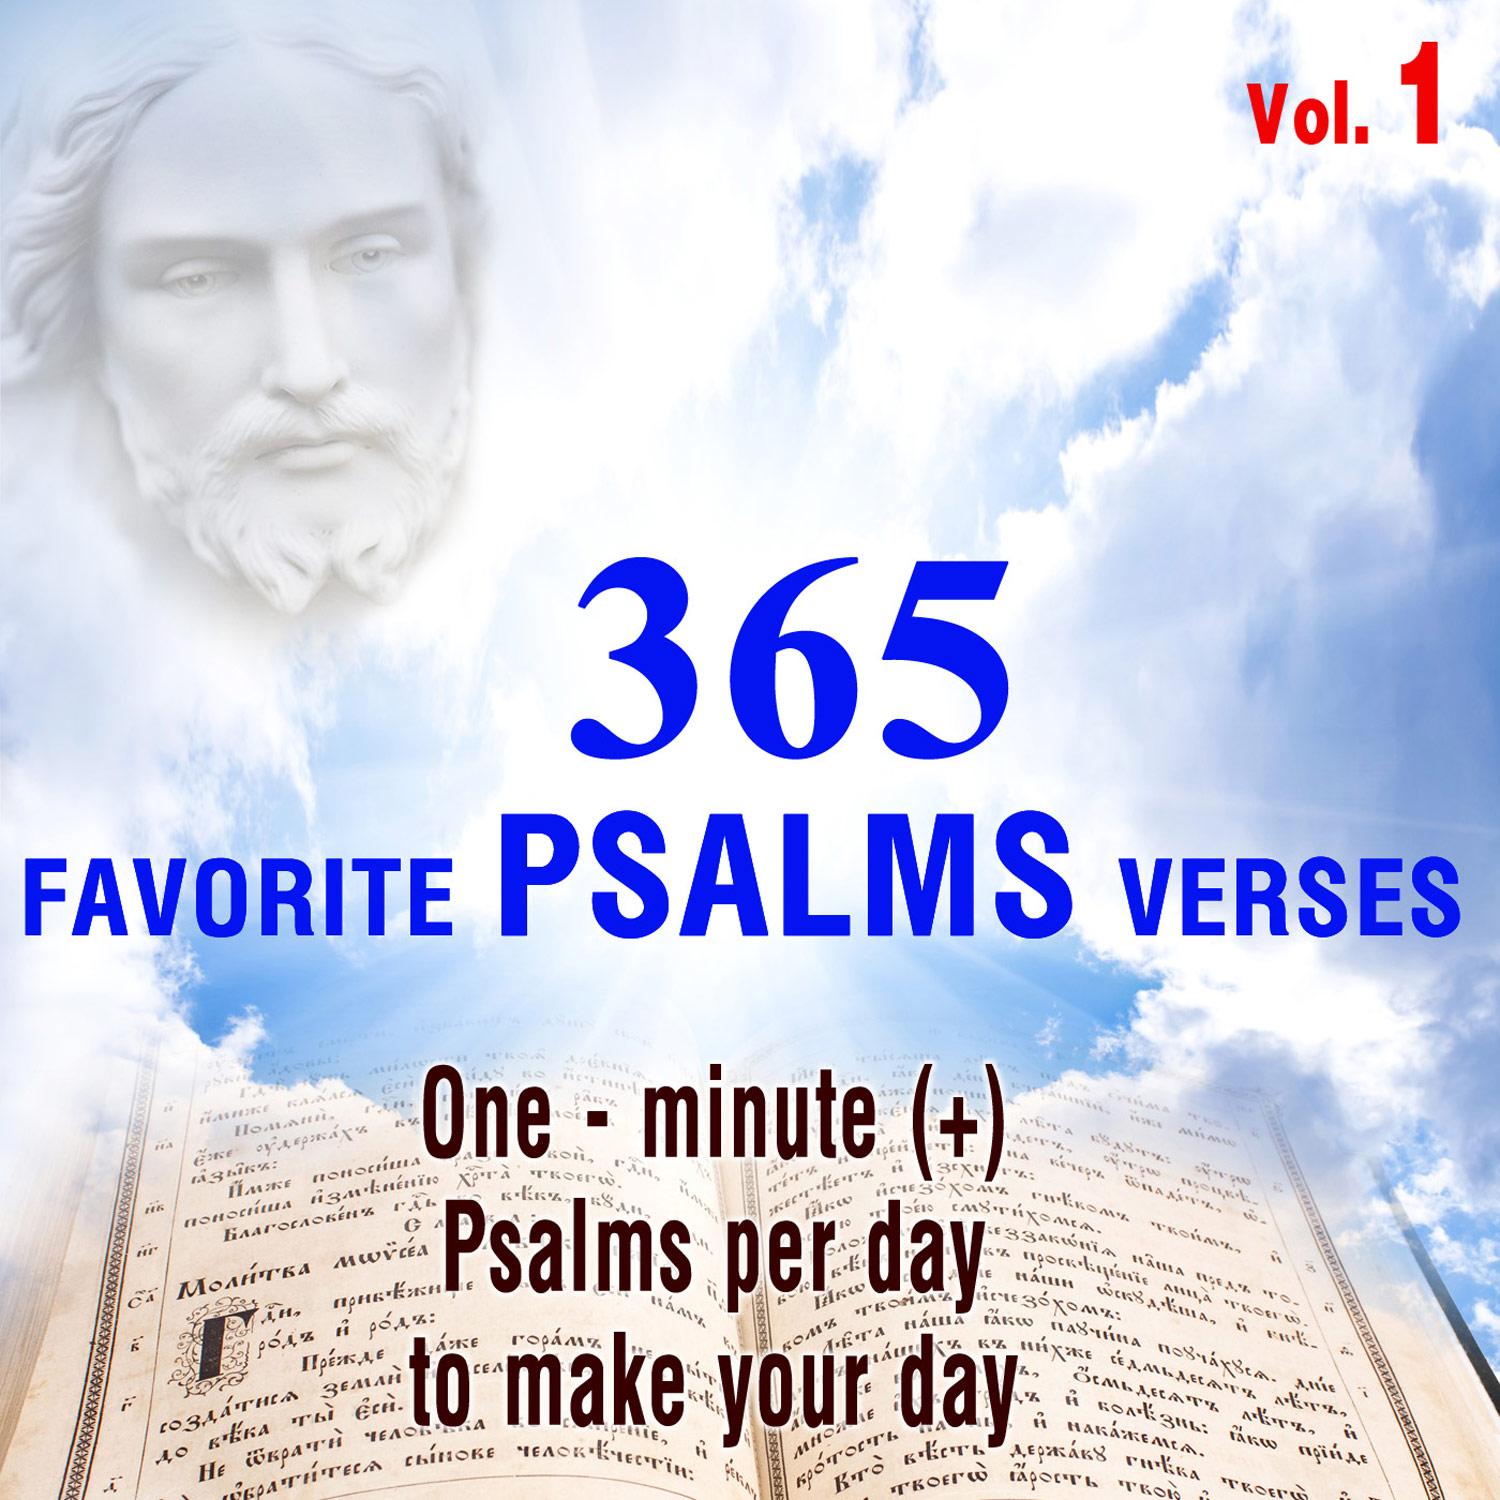 Psalms No. 63